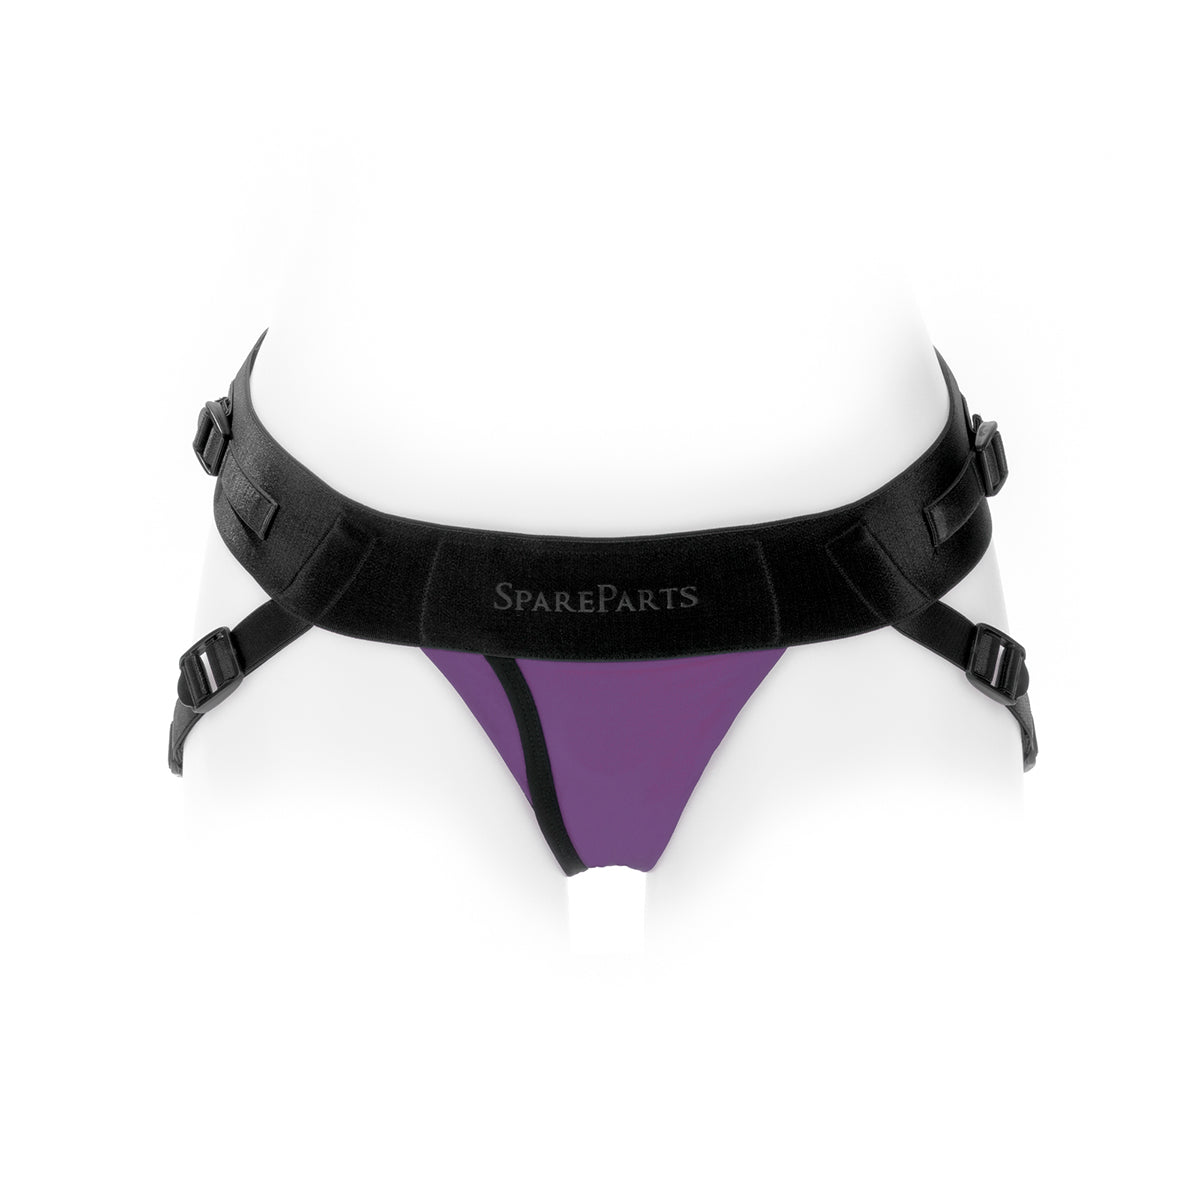 SpareParts Joque Cover Undwr Harness Purple (Double Strap) Size A Nylon